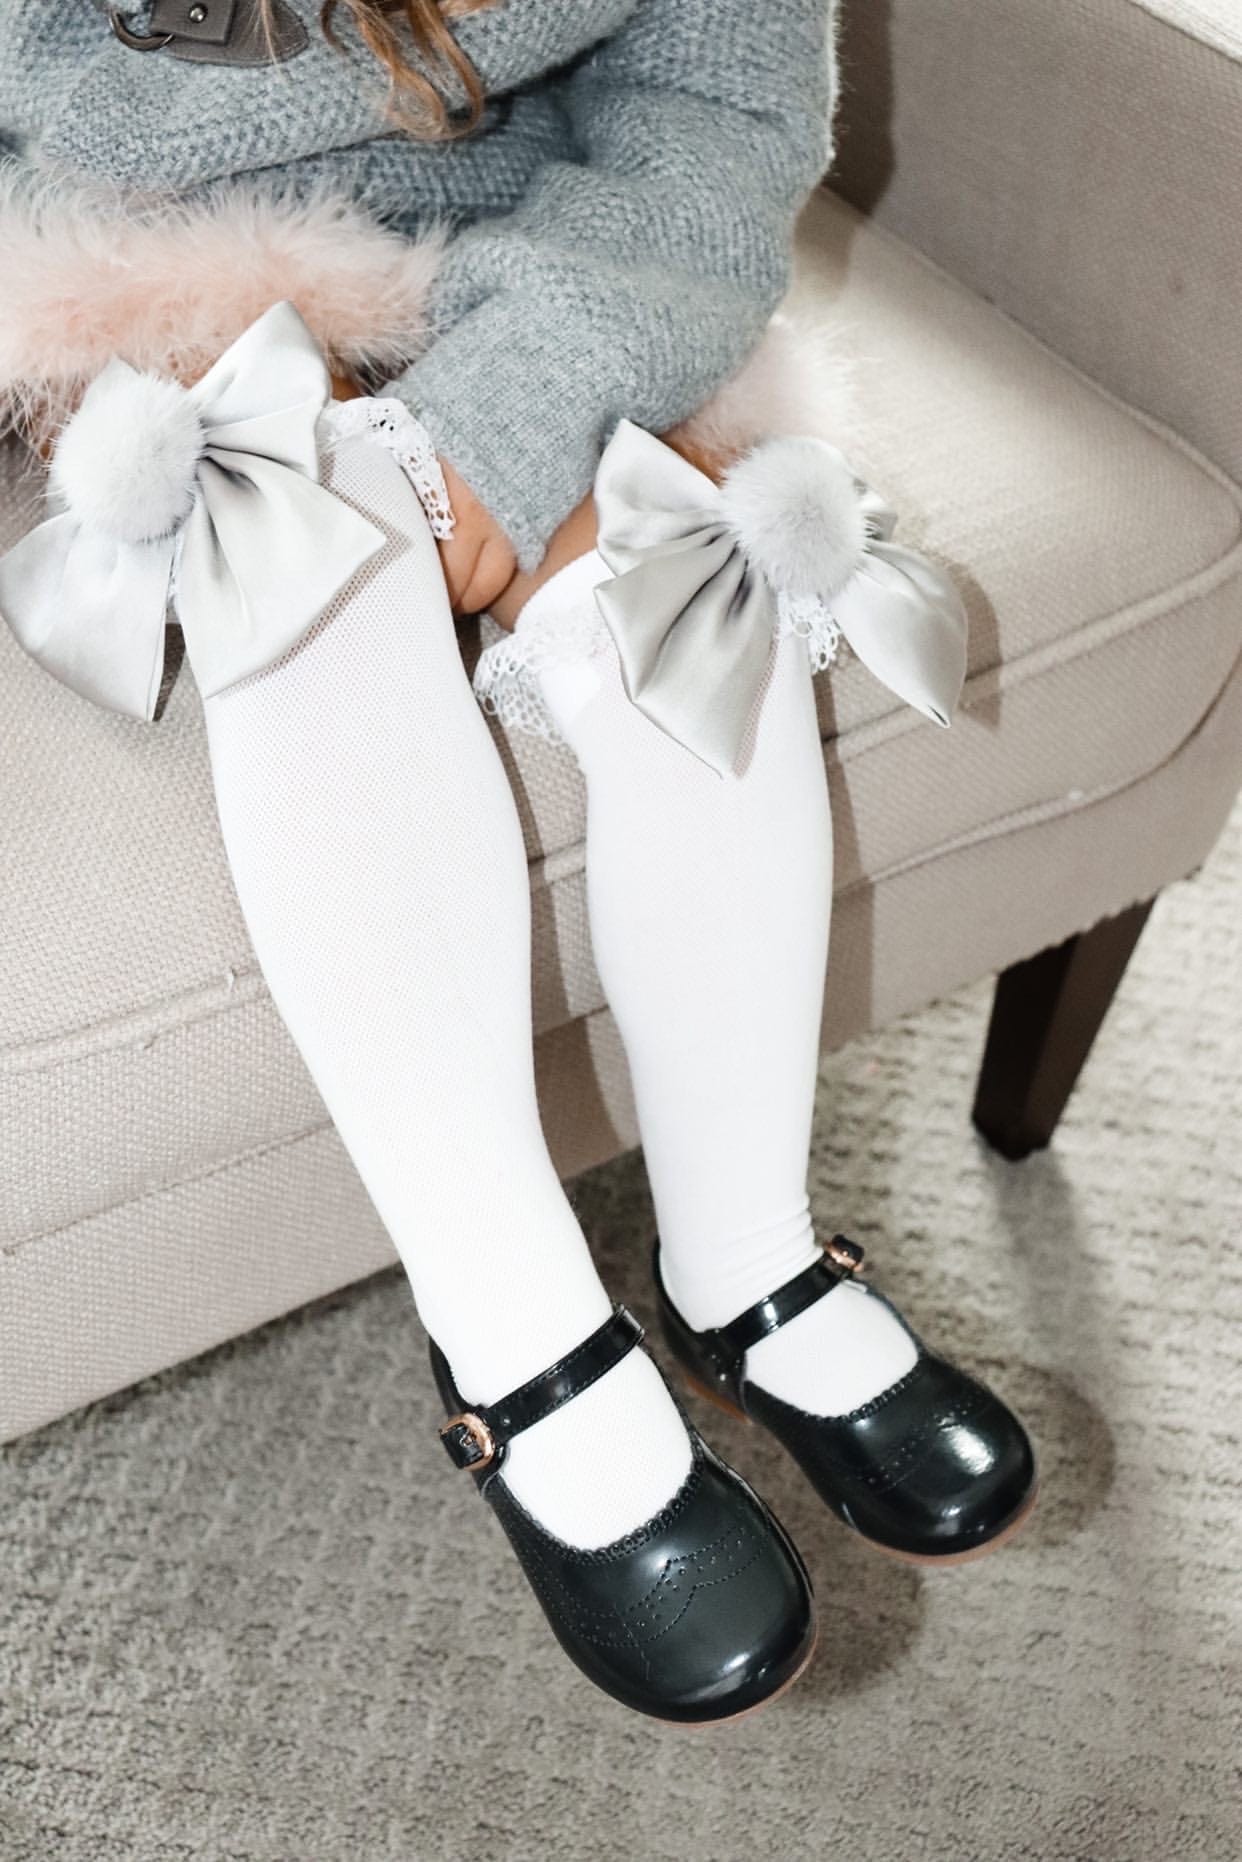 Lana Ruffle Socks with Poms and Bows - Petite Maison Kids